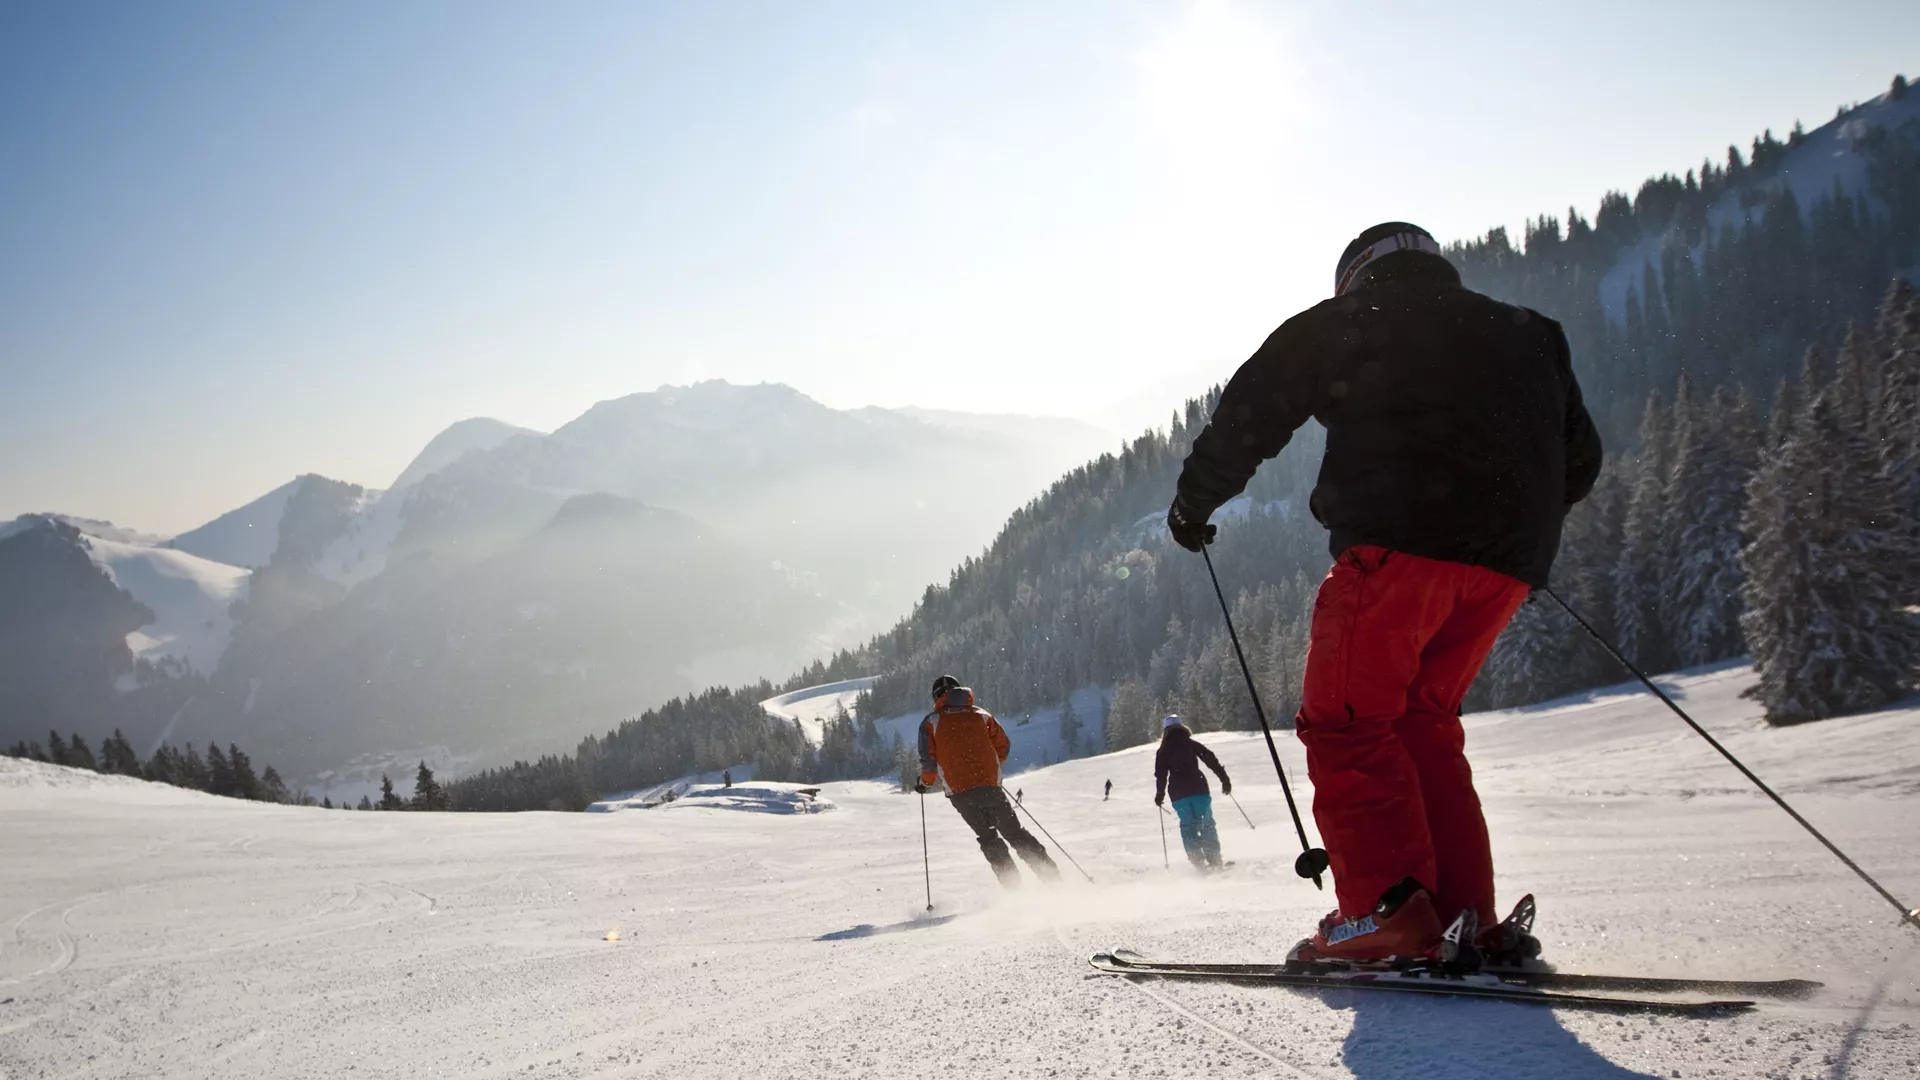 Ski School Top On Snow Sudelfeld in Germany, Europe | Snowboarding,Skiing - Rated 0.8